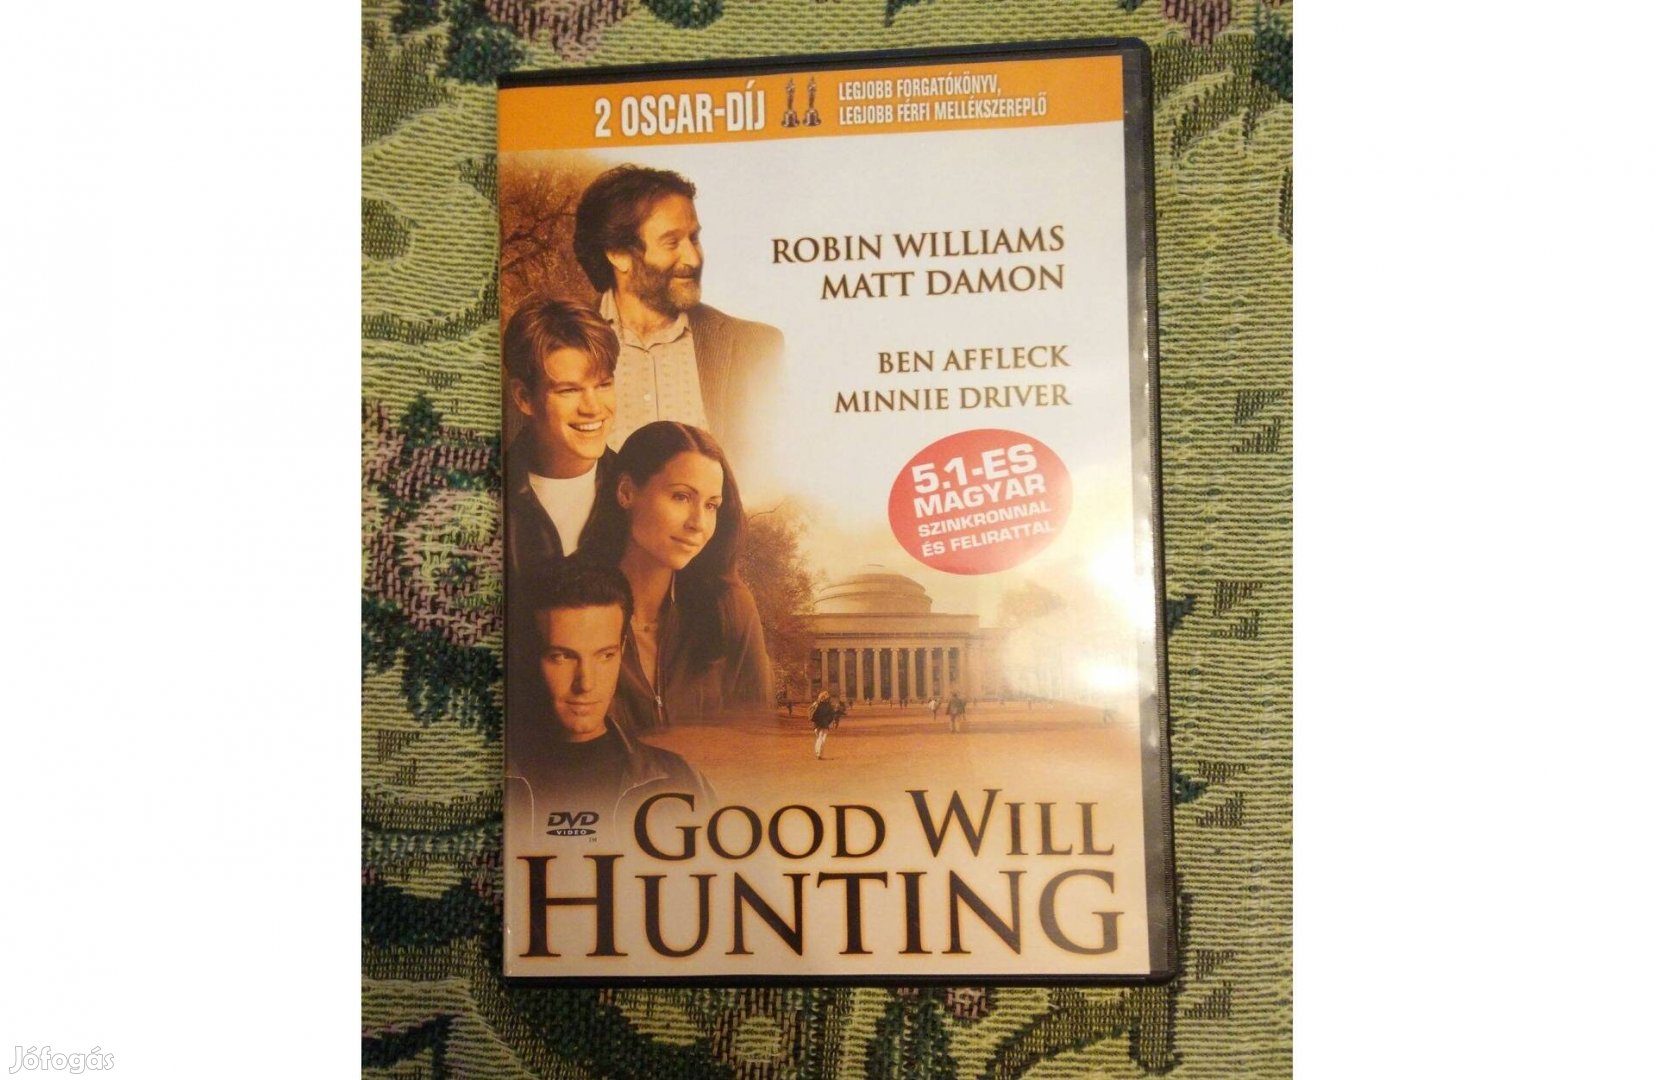 Good will hunting dvd